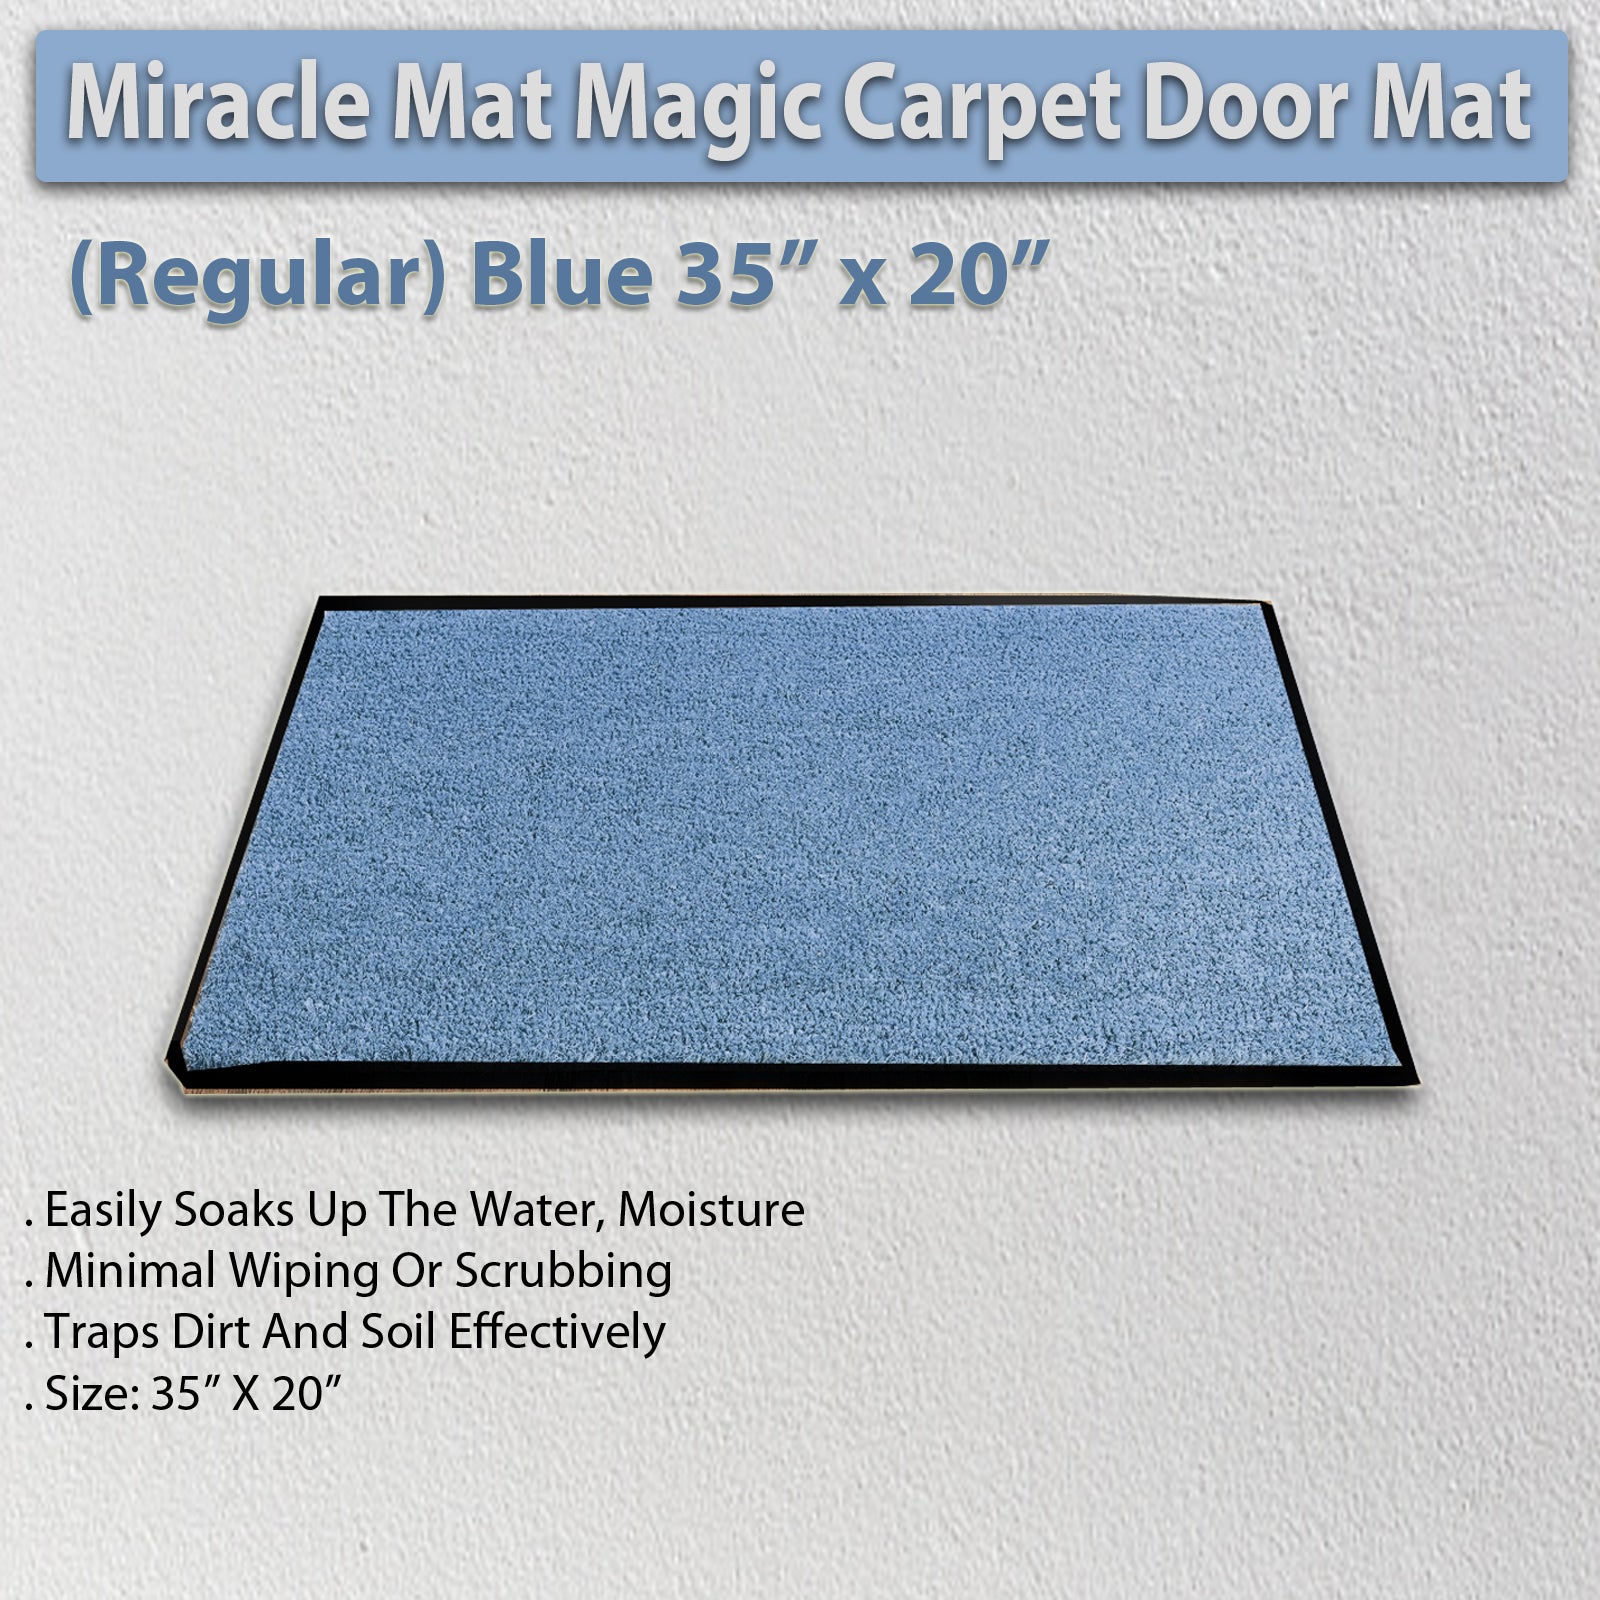 Miracle Magic Carpet Door Entry Mat Home Kitchen Blue Rug